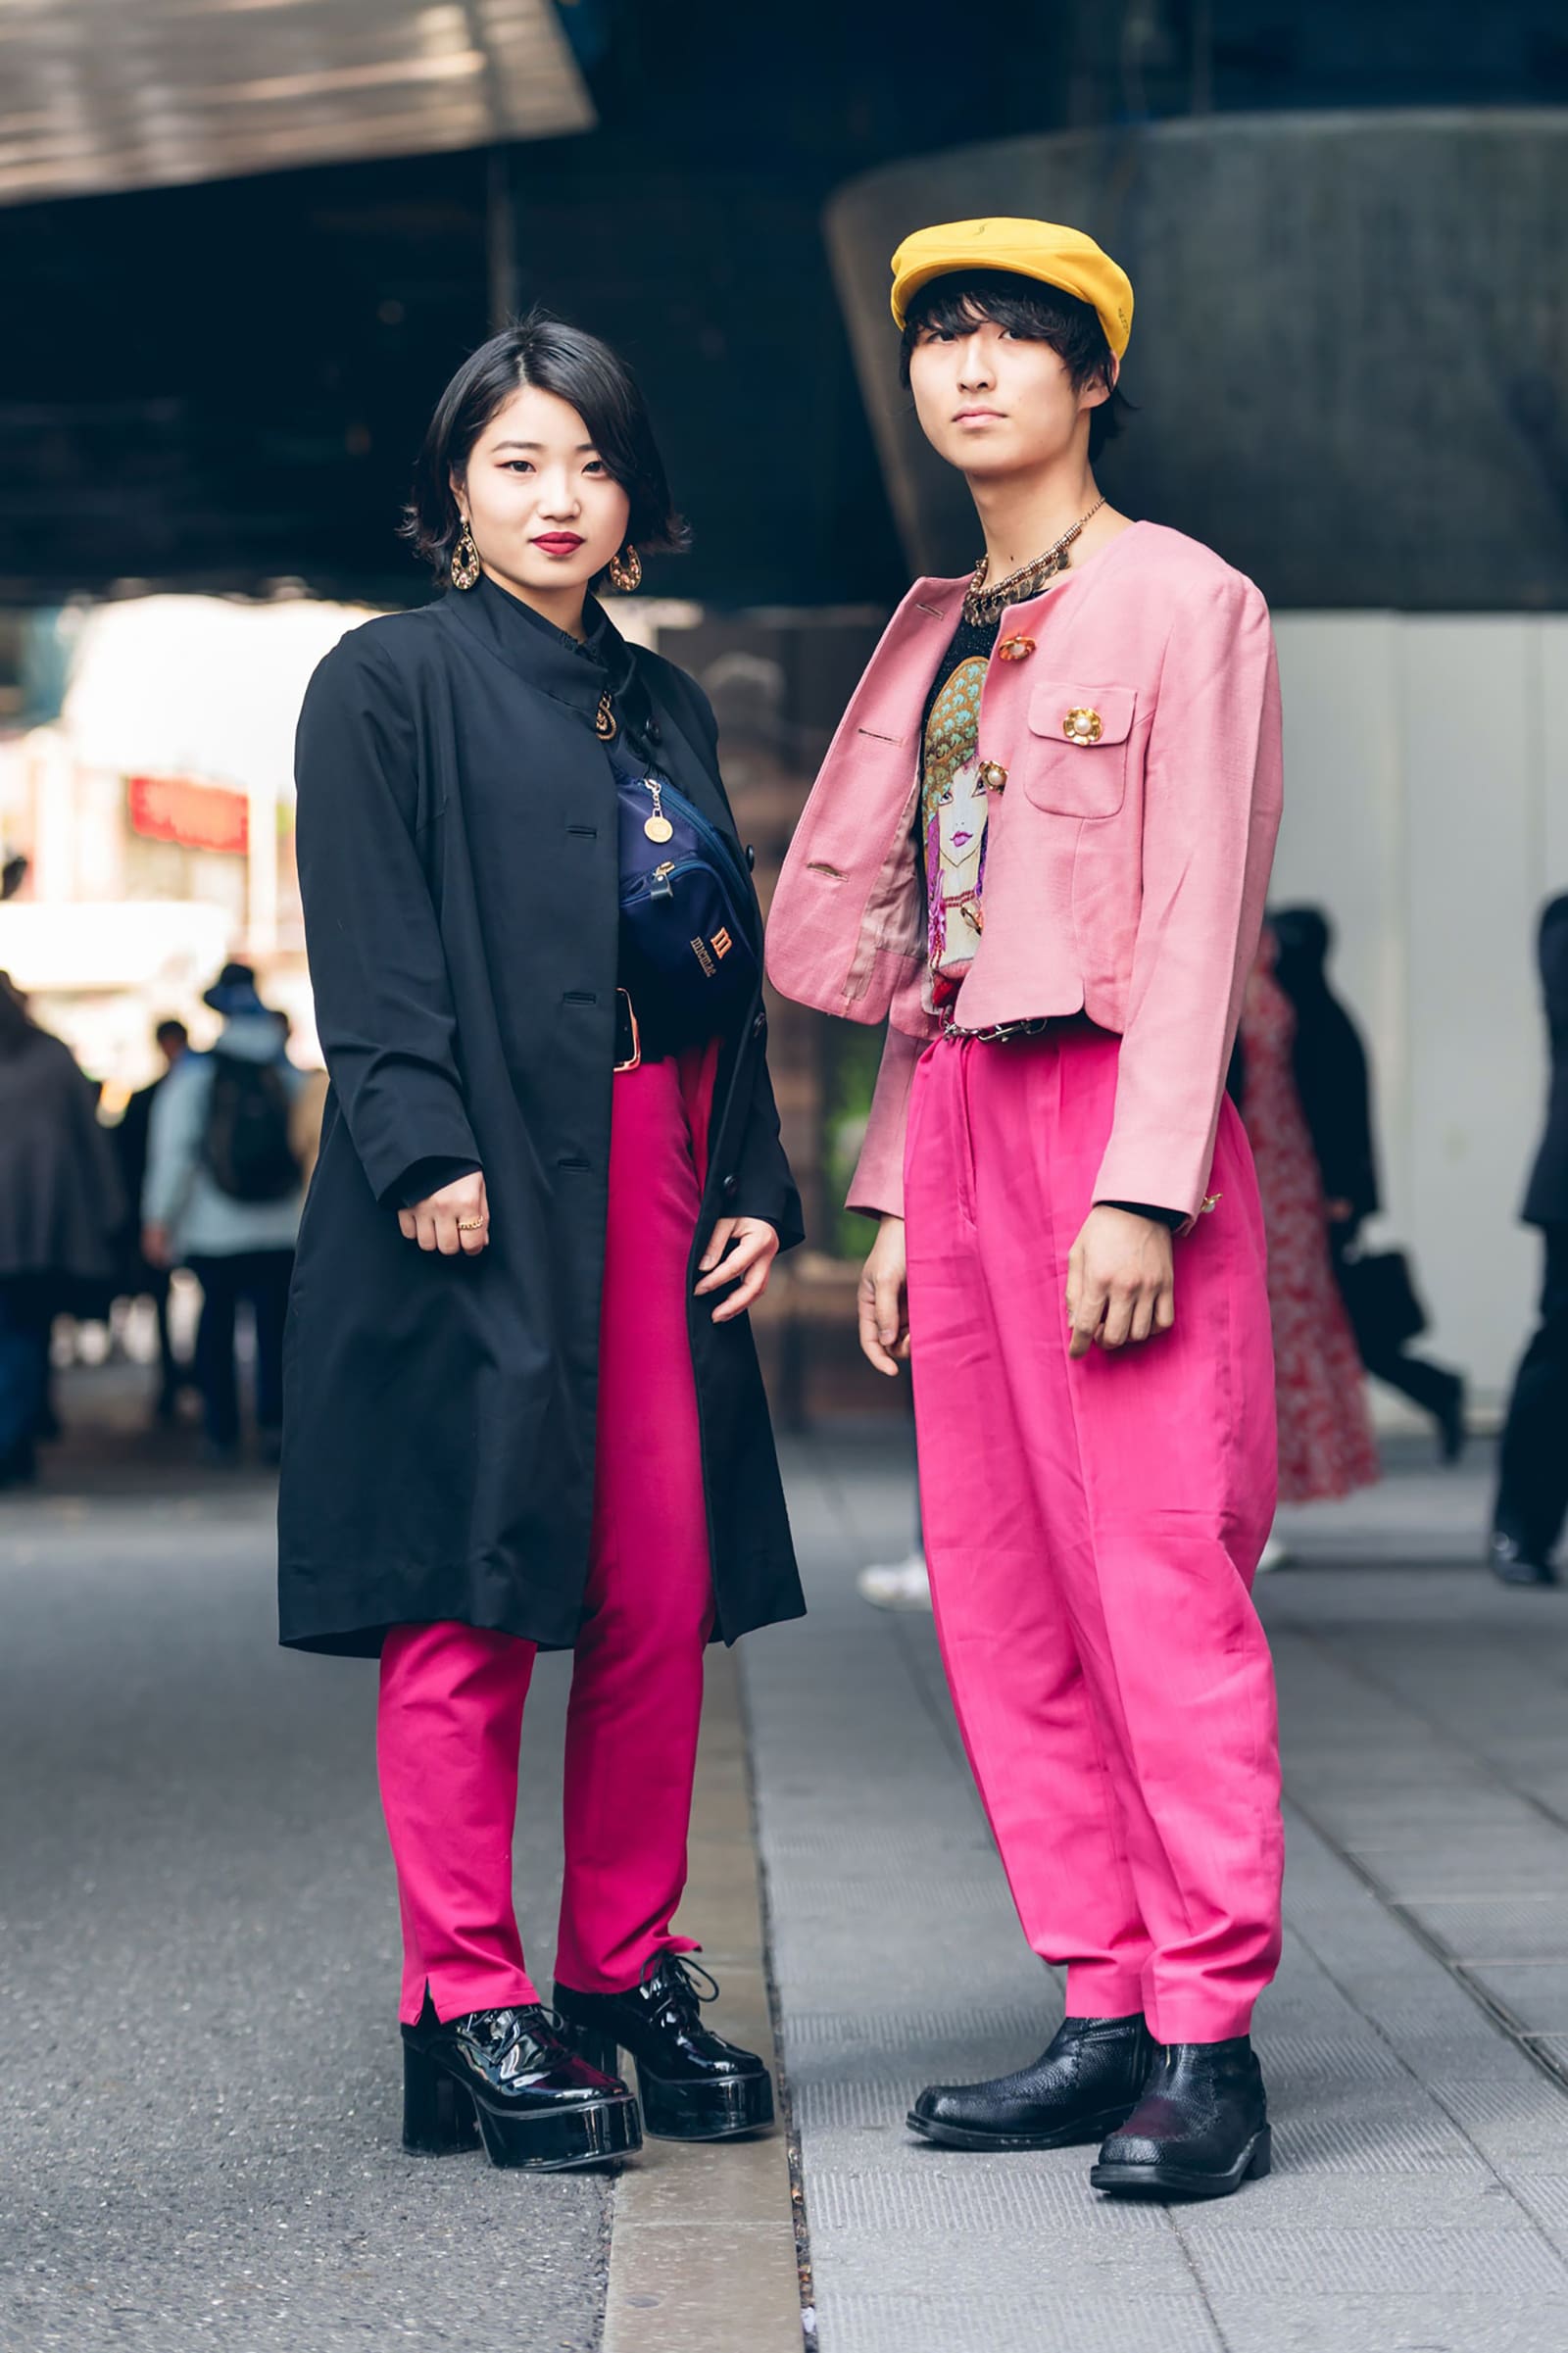 Tokyo, fall 2019 ready-to-wear Photographed by Kira / TokyoFashion.com